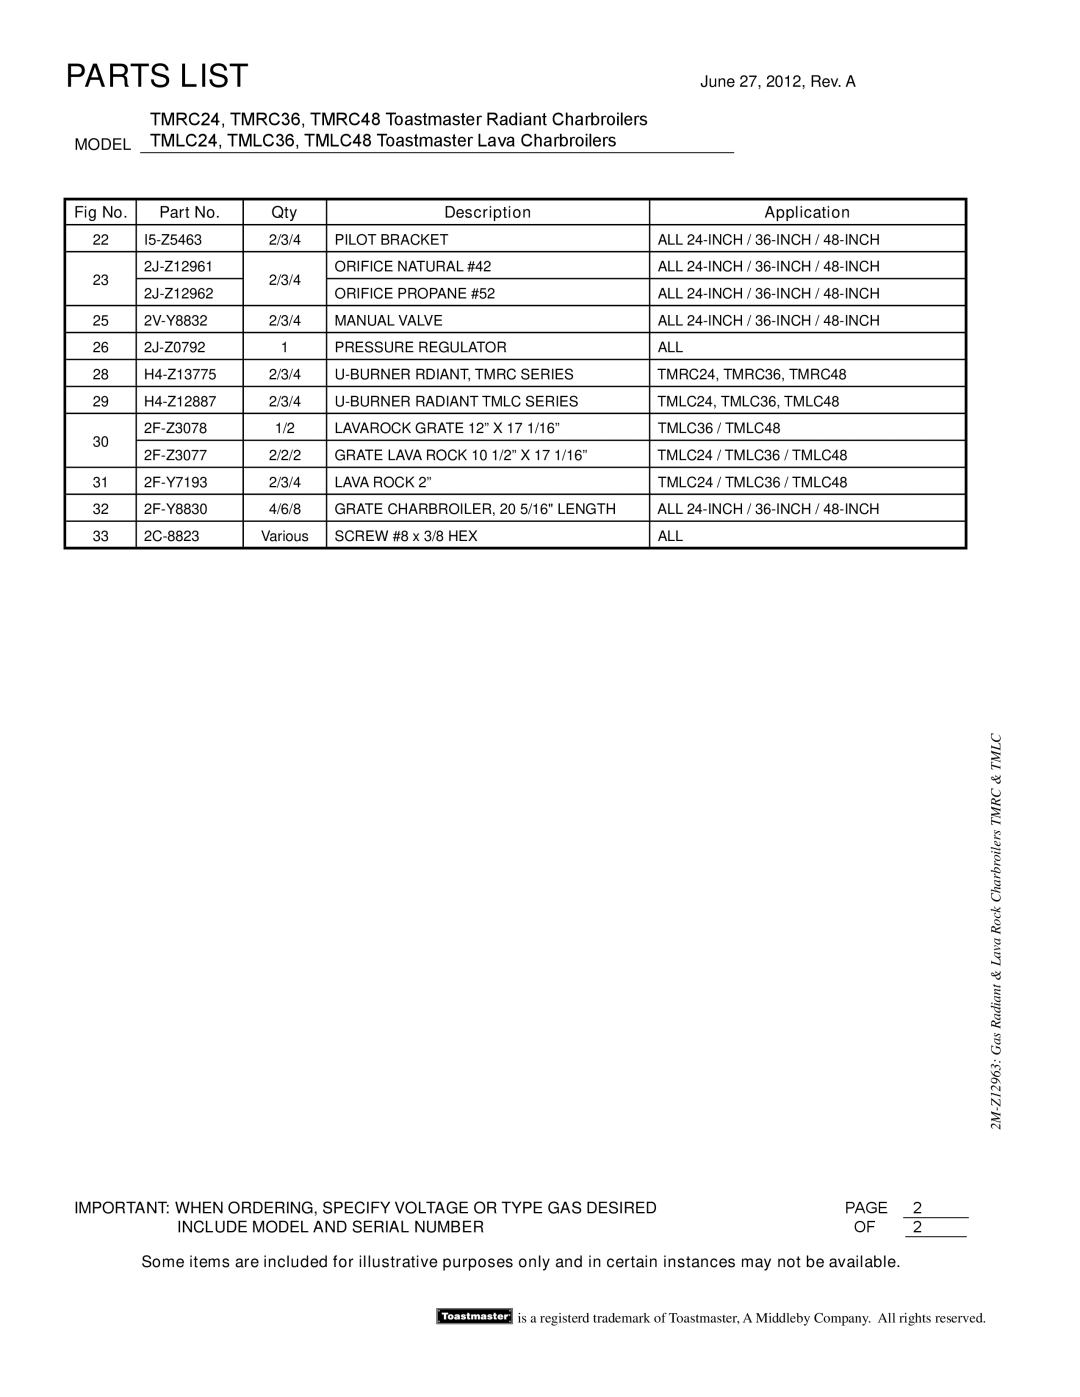 Toastmaster TMRC24, TMRC48, TMRC36 manual Parts List, Various 